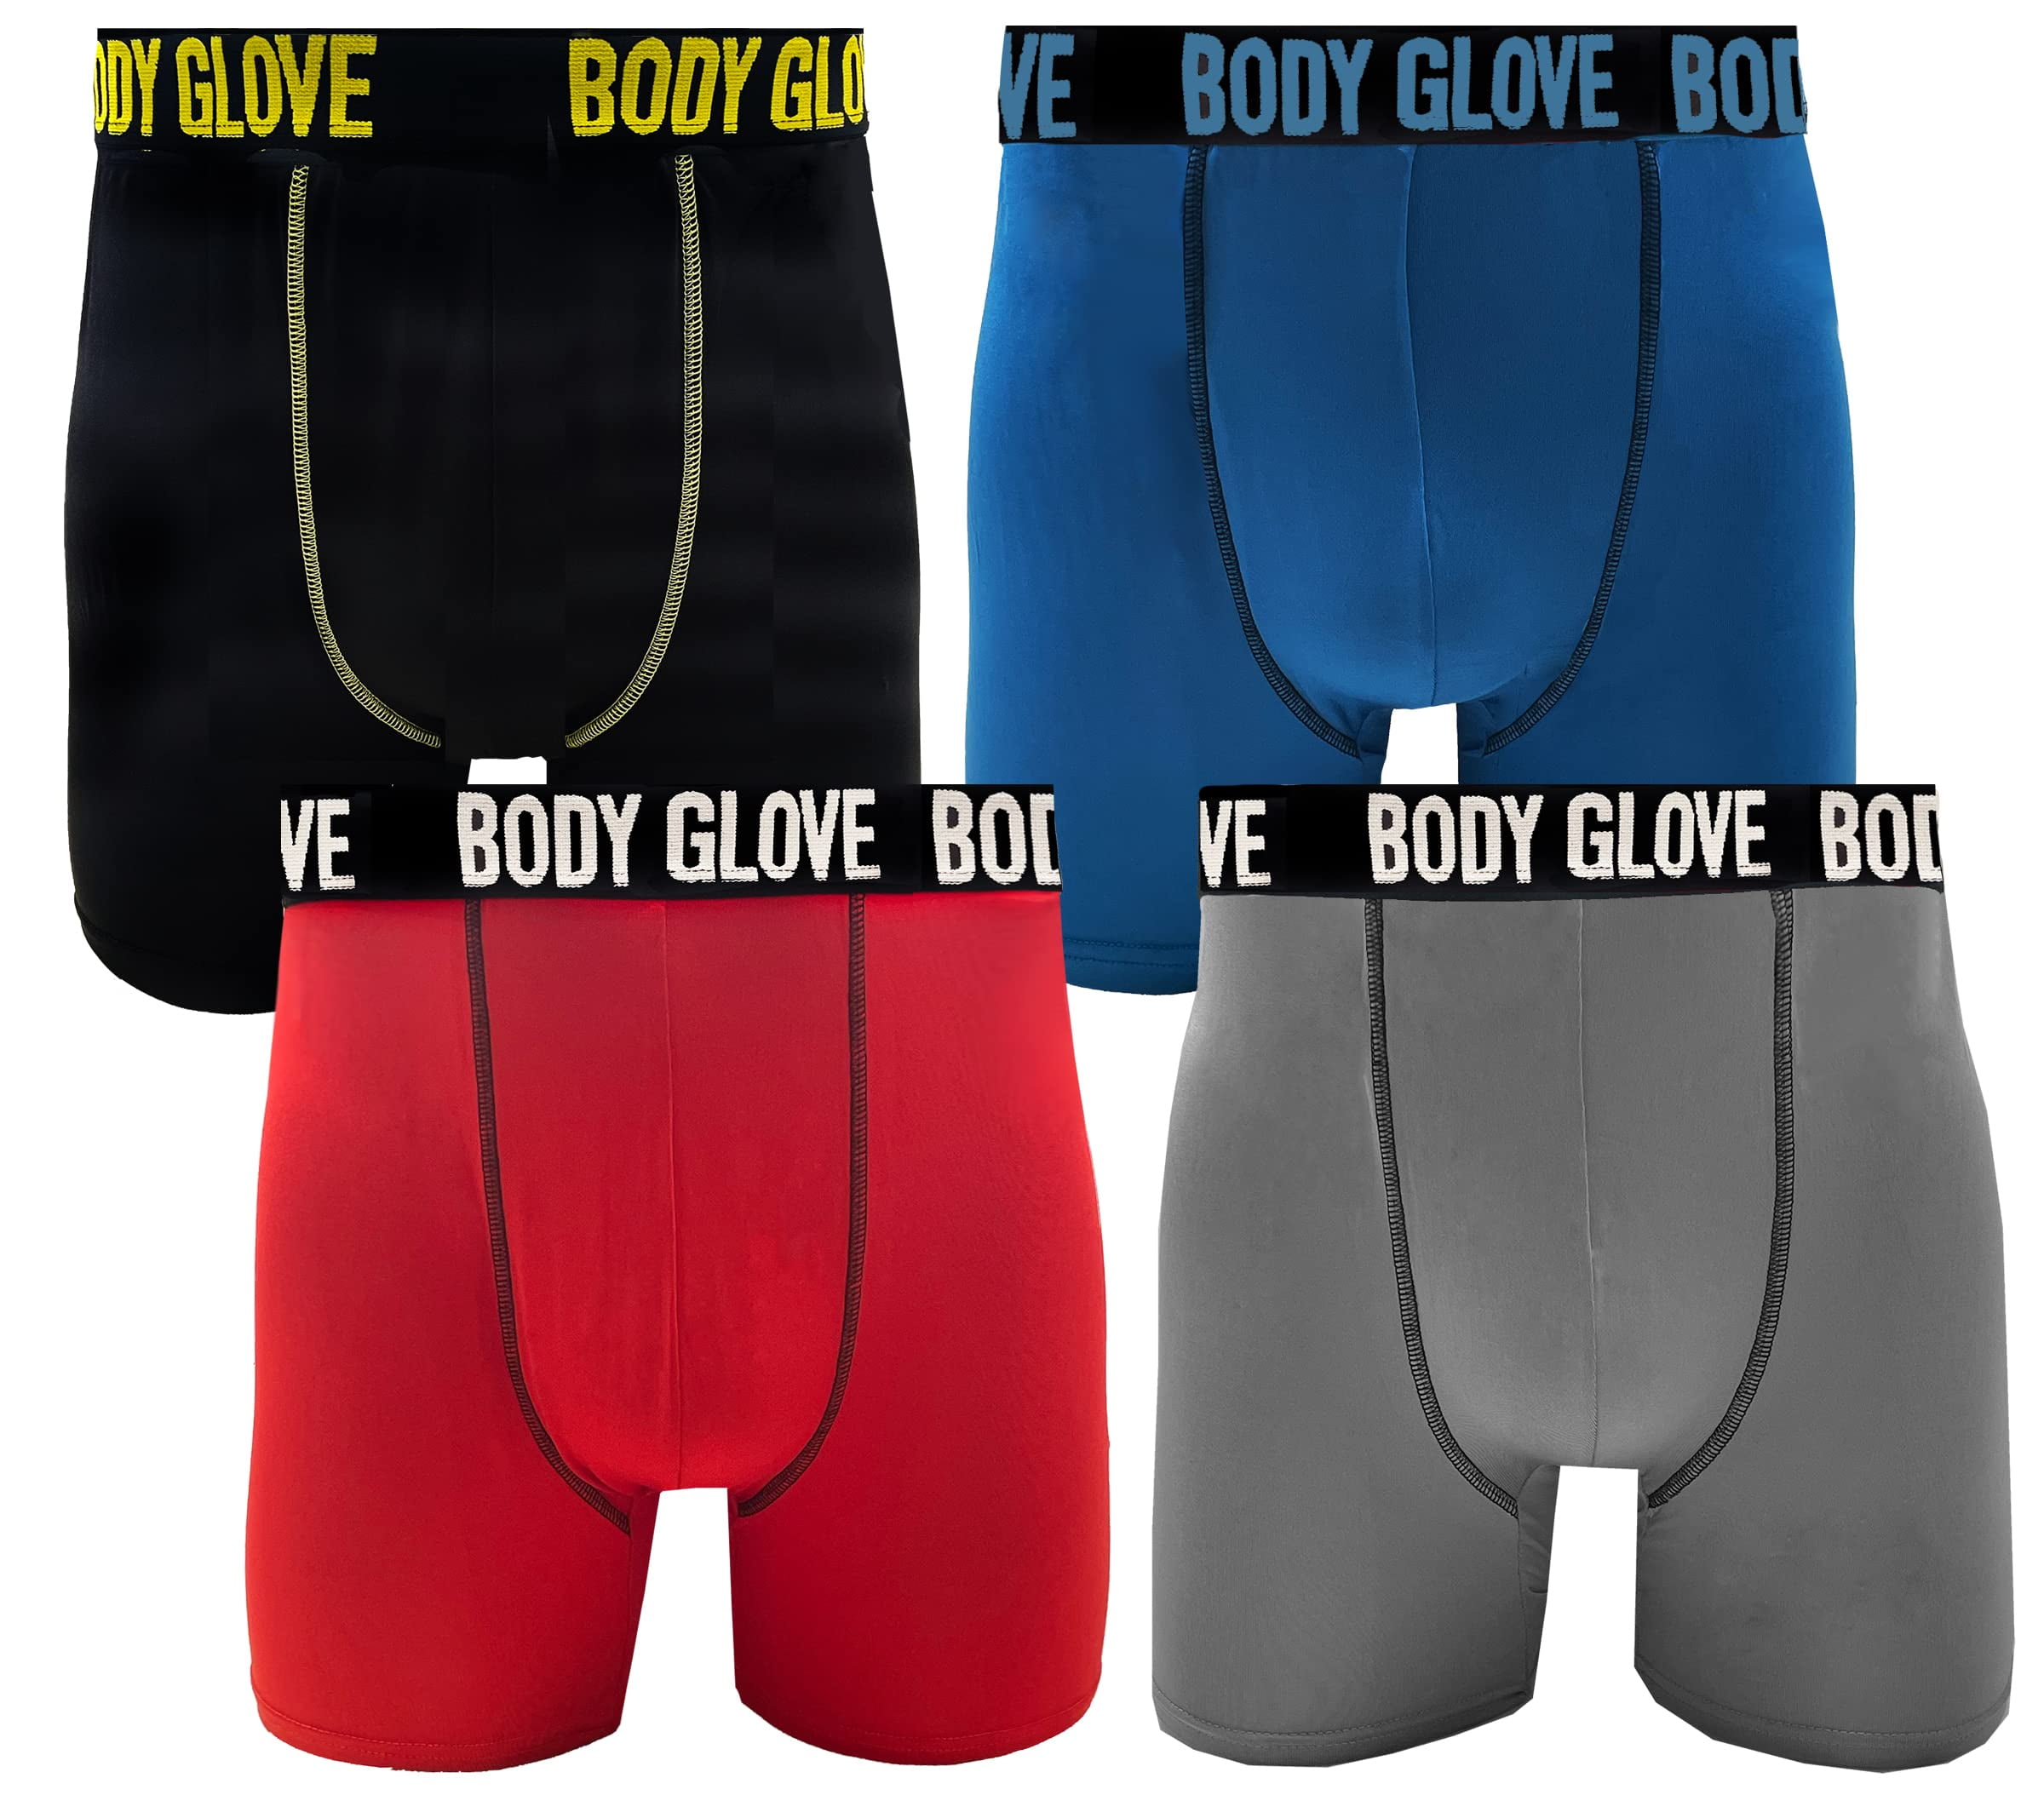 Body Glove Performance Boxer Brief  Clothes design, Body glove, Gym shorts  womens